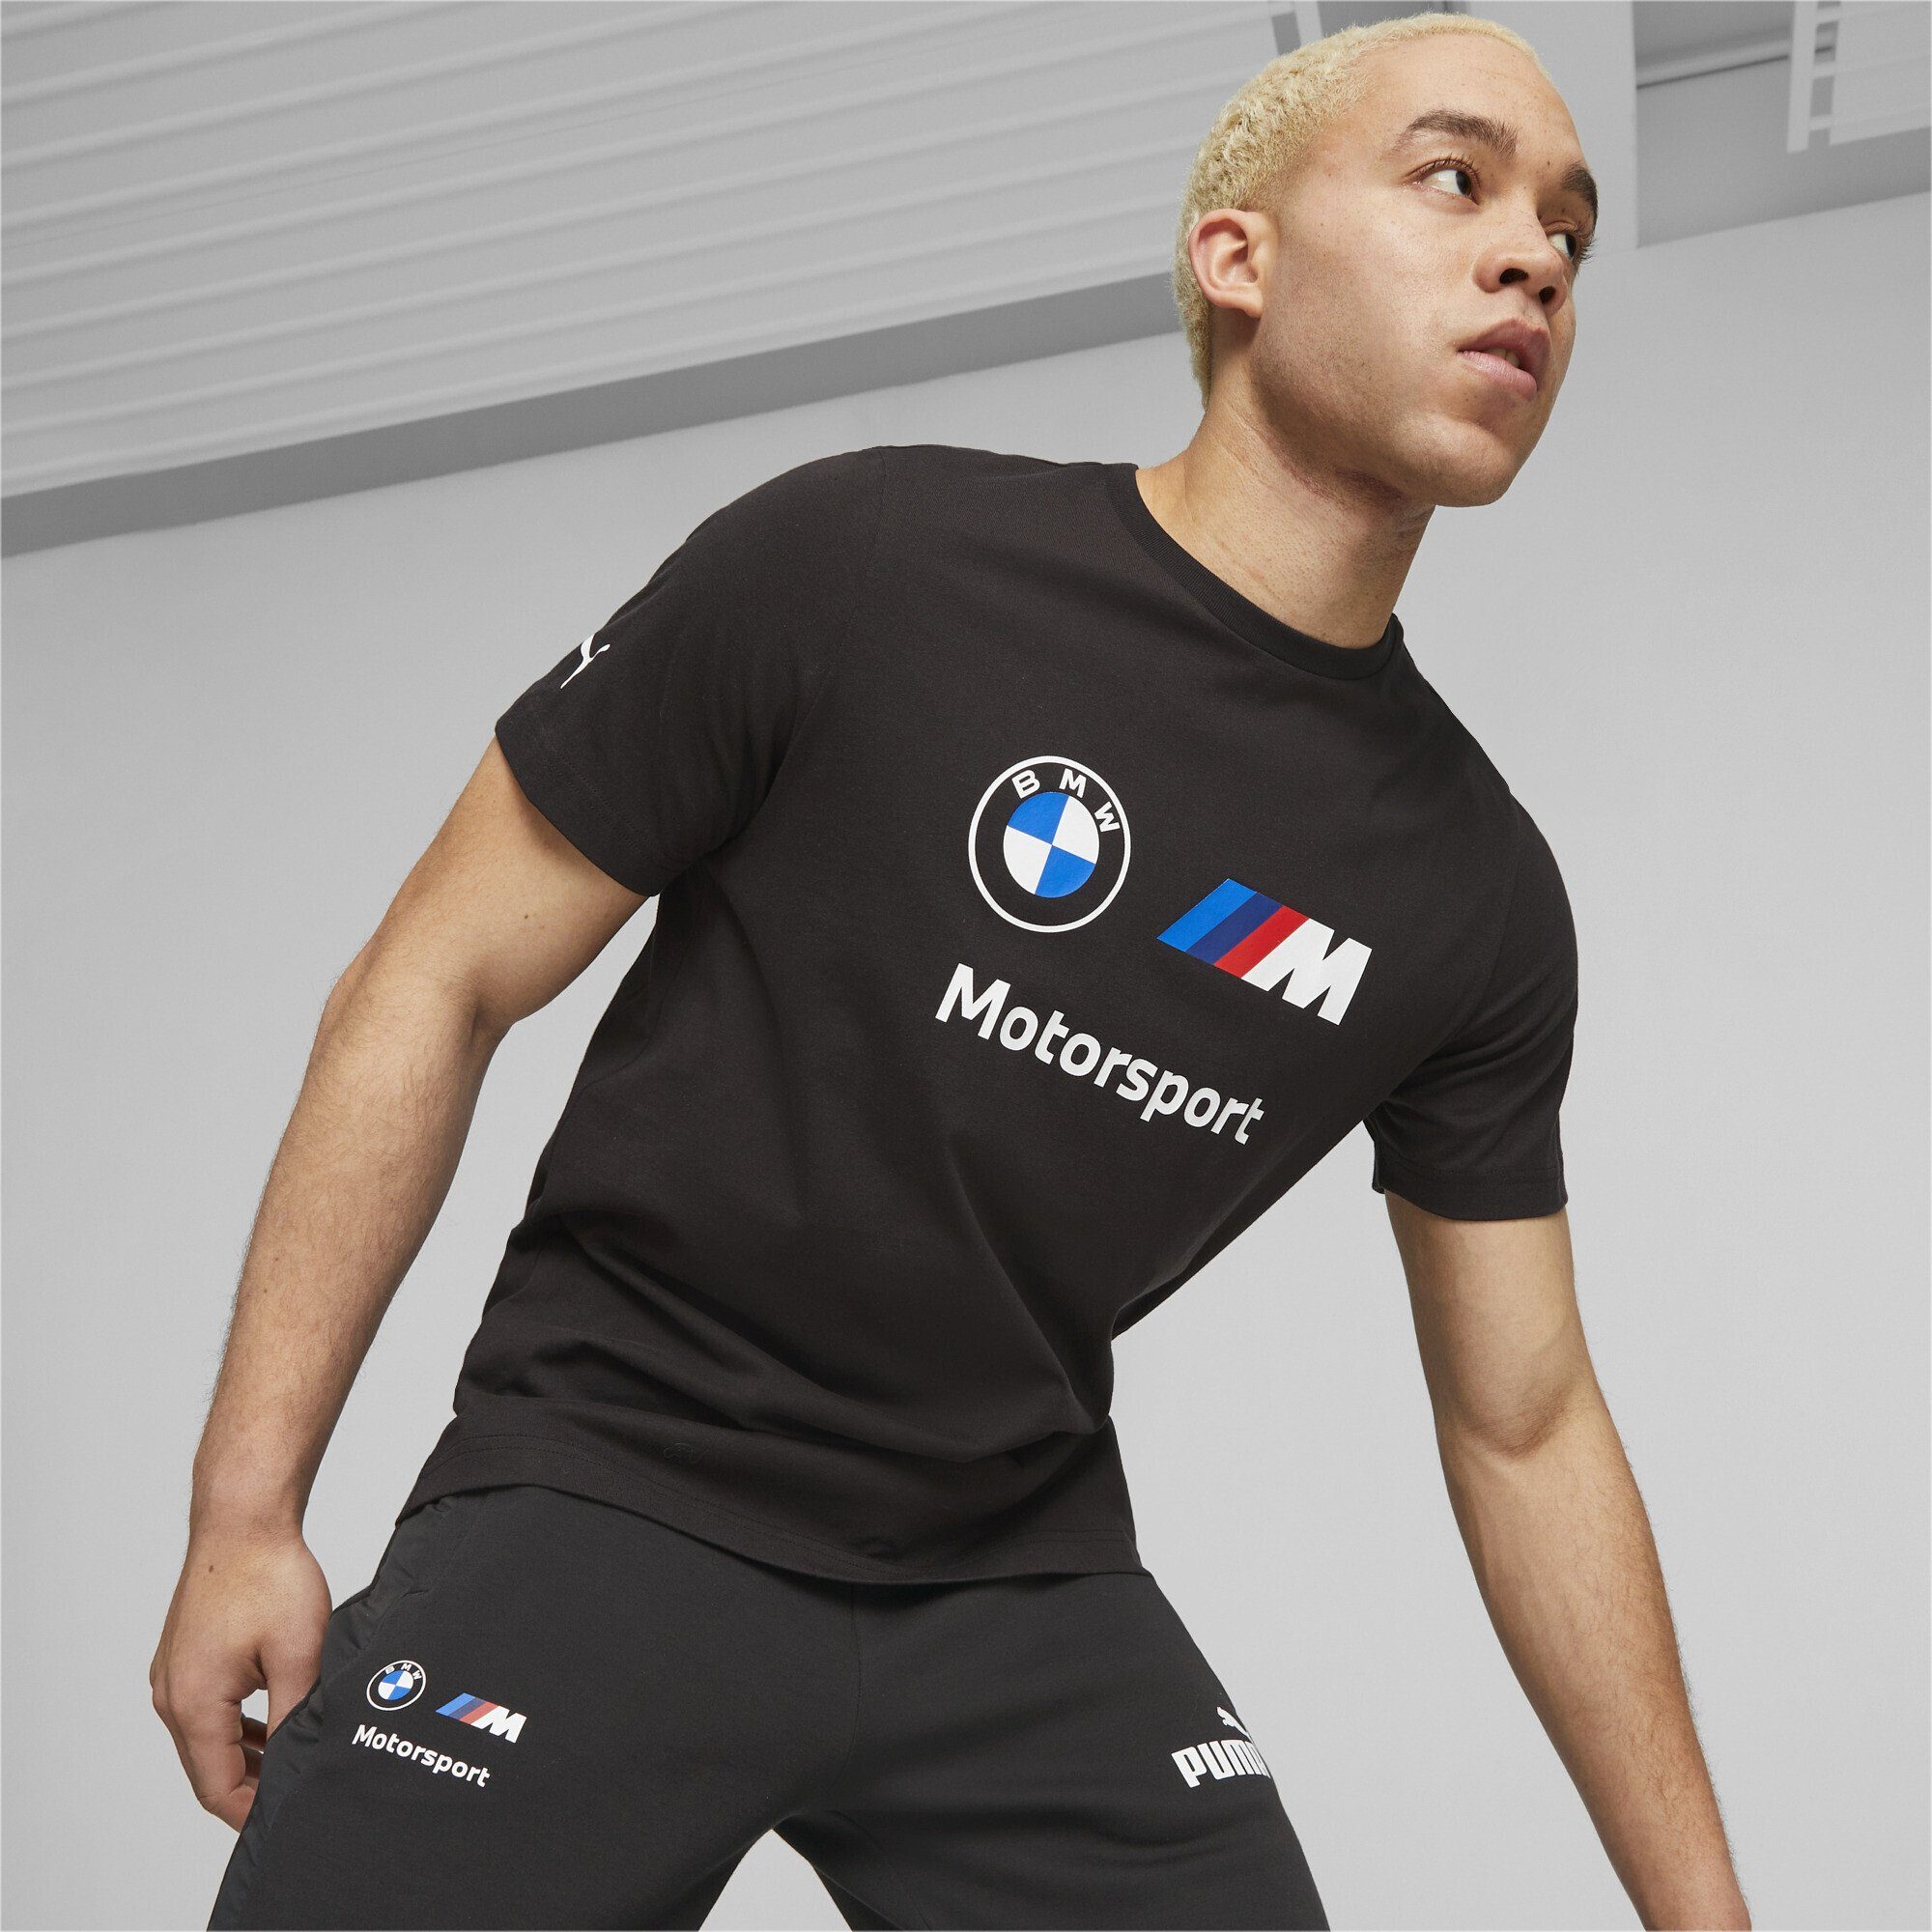 Motorsport M Herren BMW ESS T-Shirt Black PUMA Logo-T-Shirt